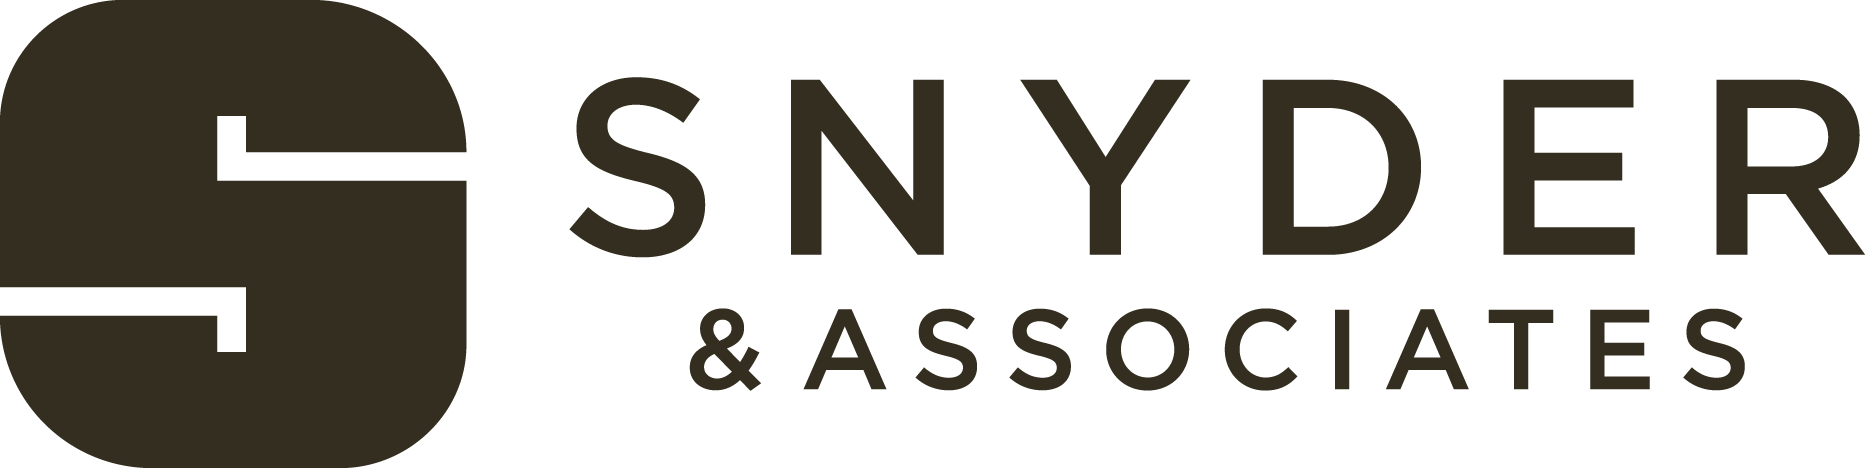 Snyder & Associates logo